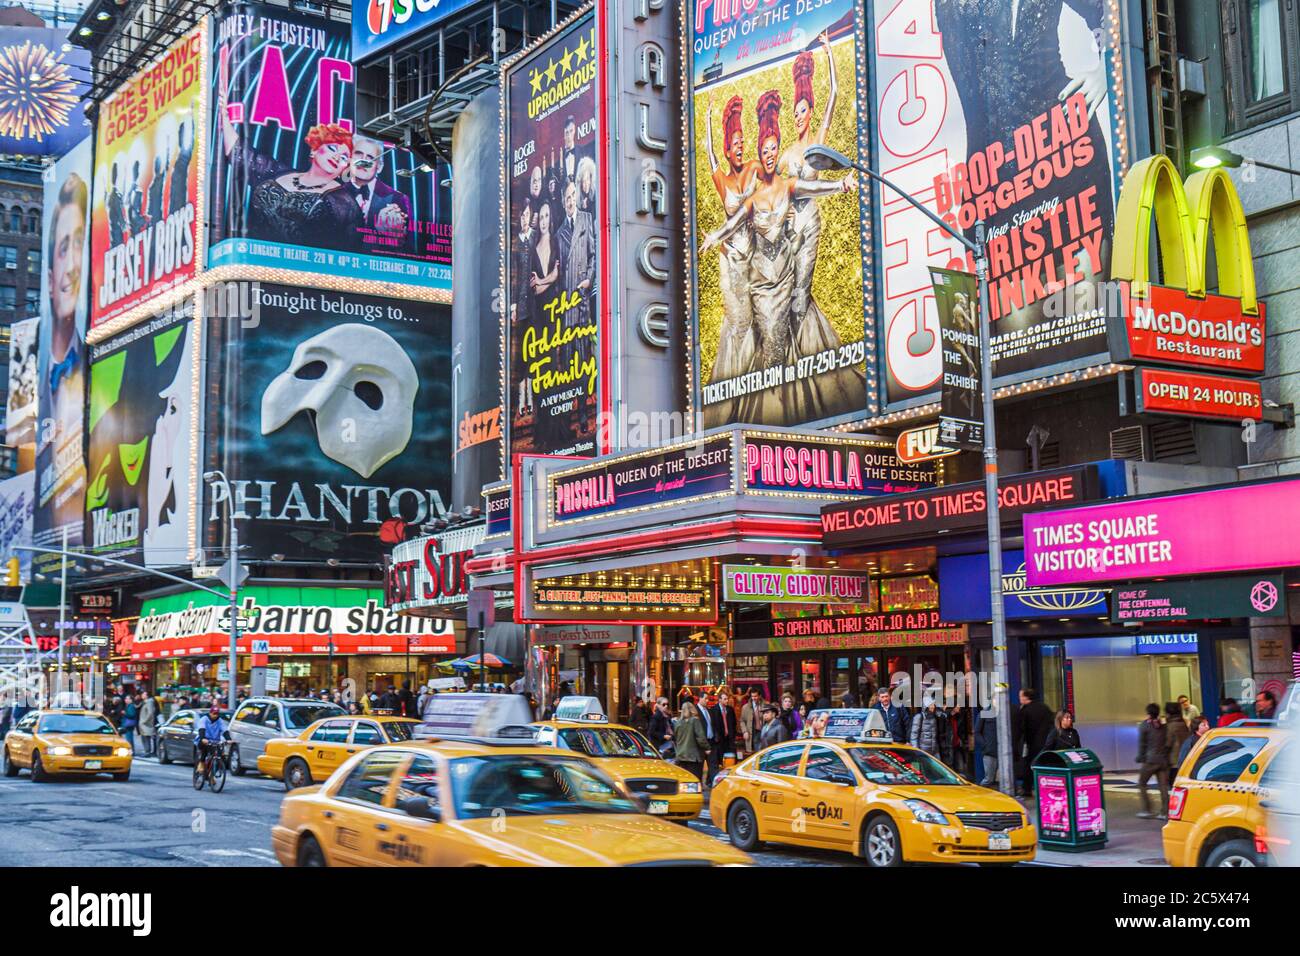 New York City,NYC NY Midtown,Manhattan,Times Square,Theatre District,Broadway,illuminated sign,spectaculars,ad,Phantom,Priscilla,street scene,taxi,tax Stock Photo